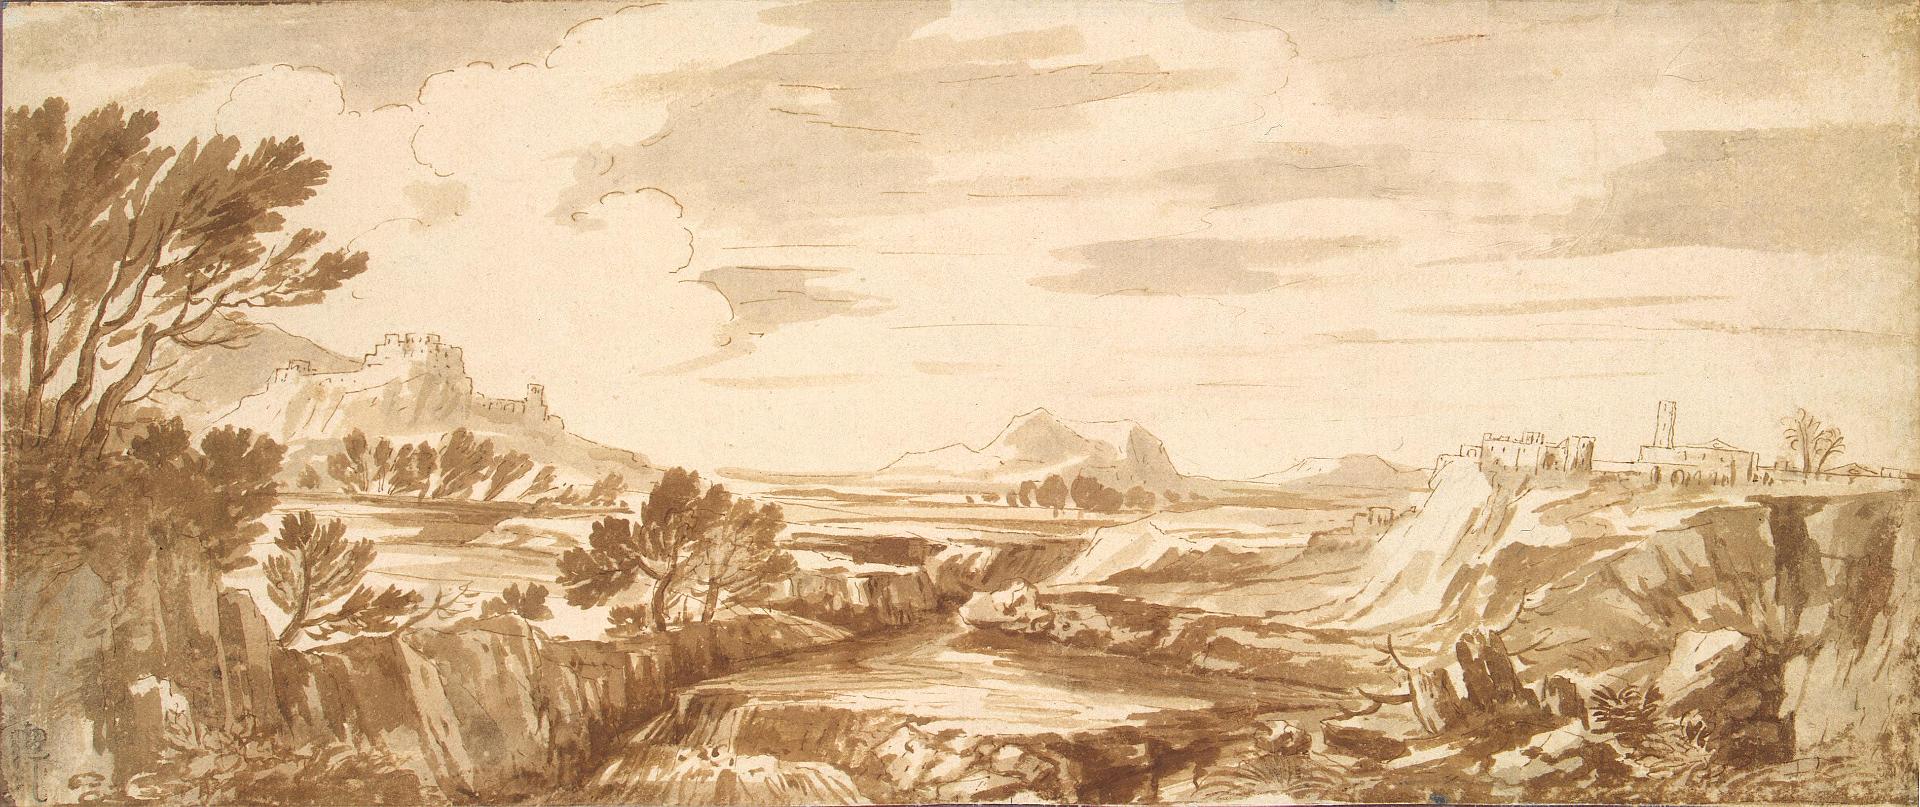 Гаспар Дюге. "Равнина Лациума с рекой". Между 1646-1651. Эрмитаж, Санкт-Петербург.